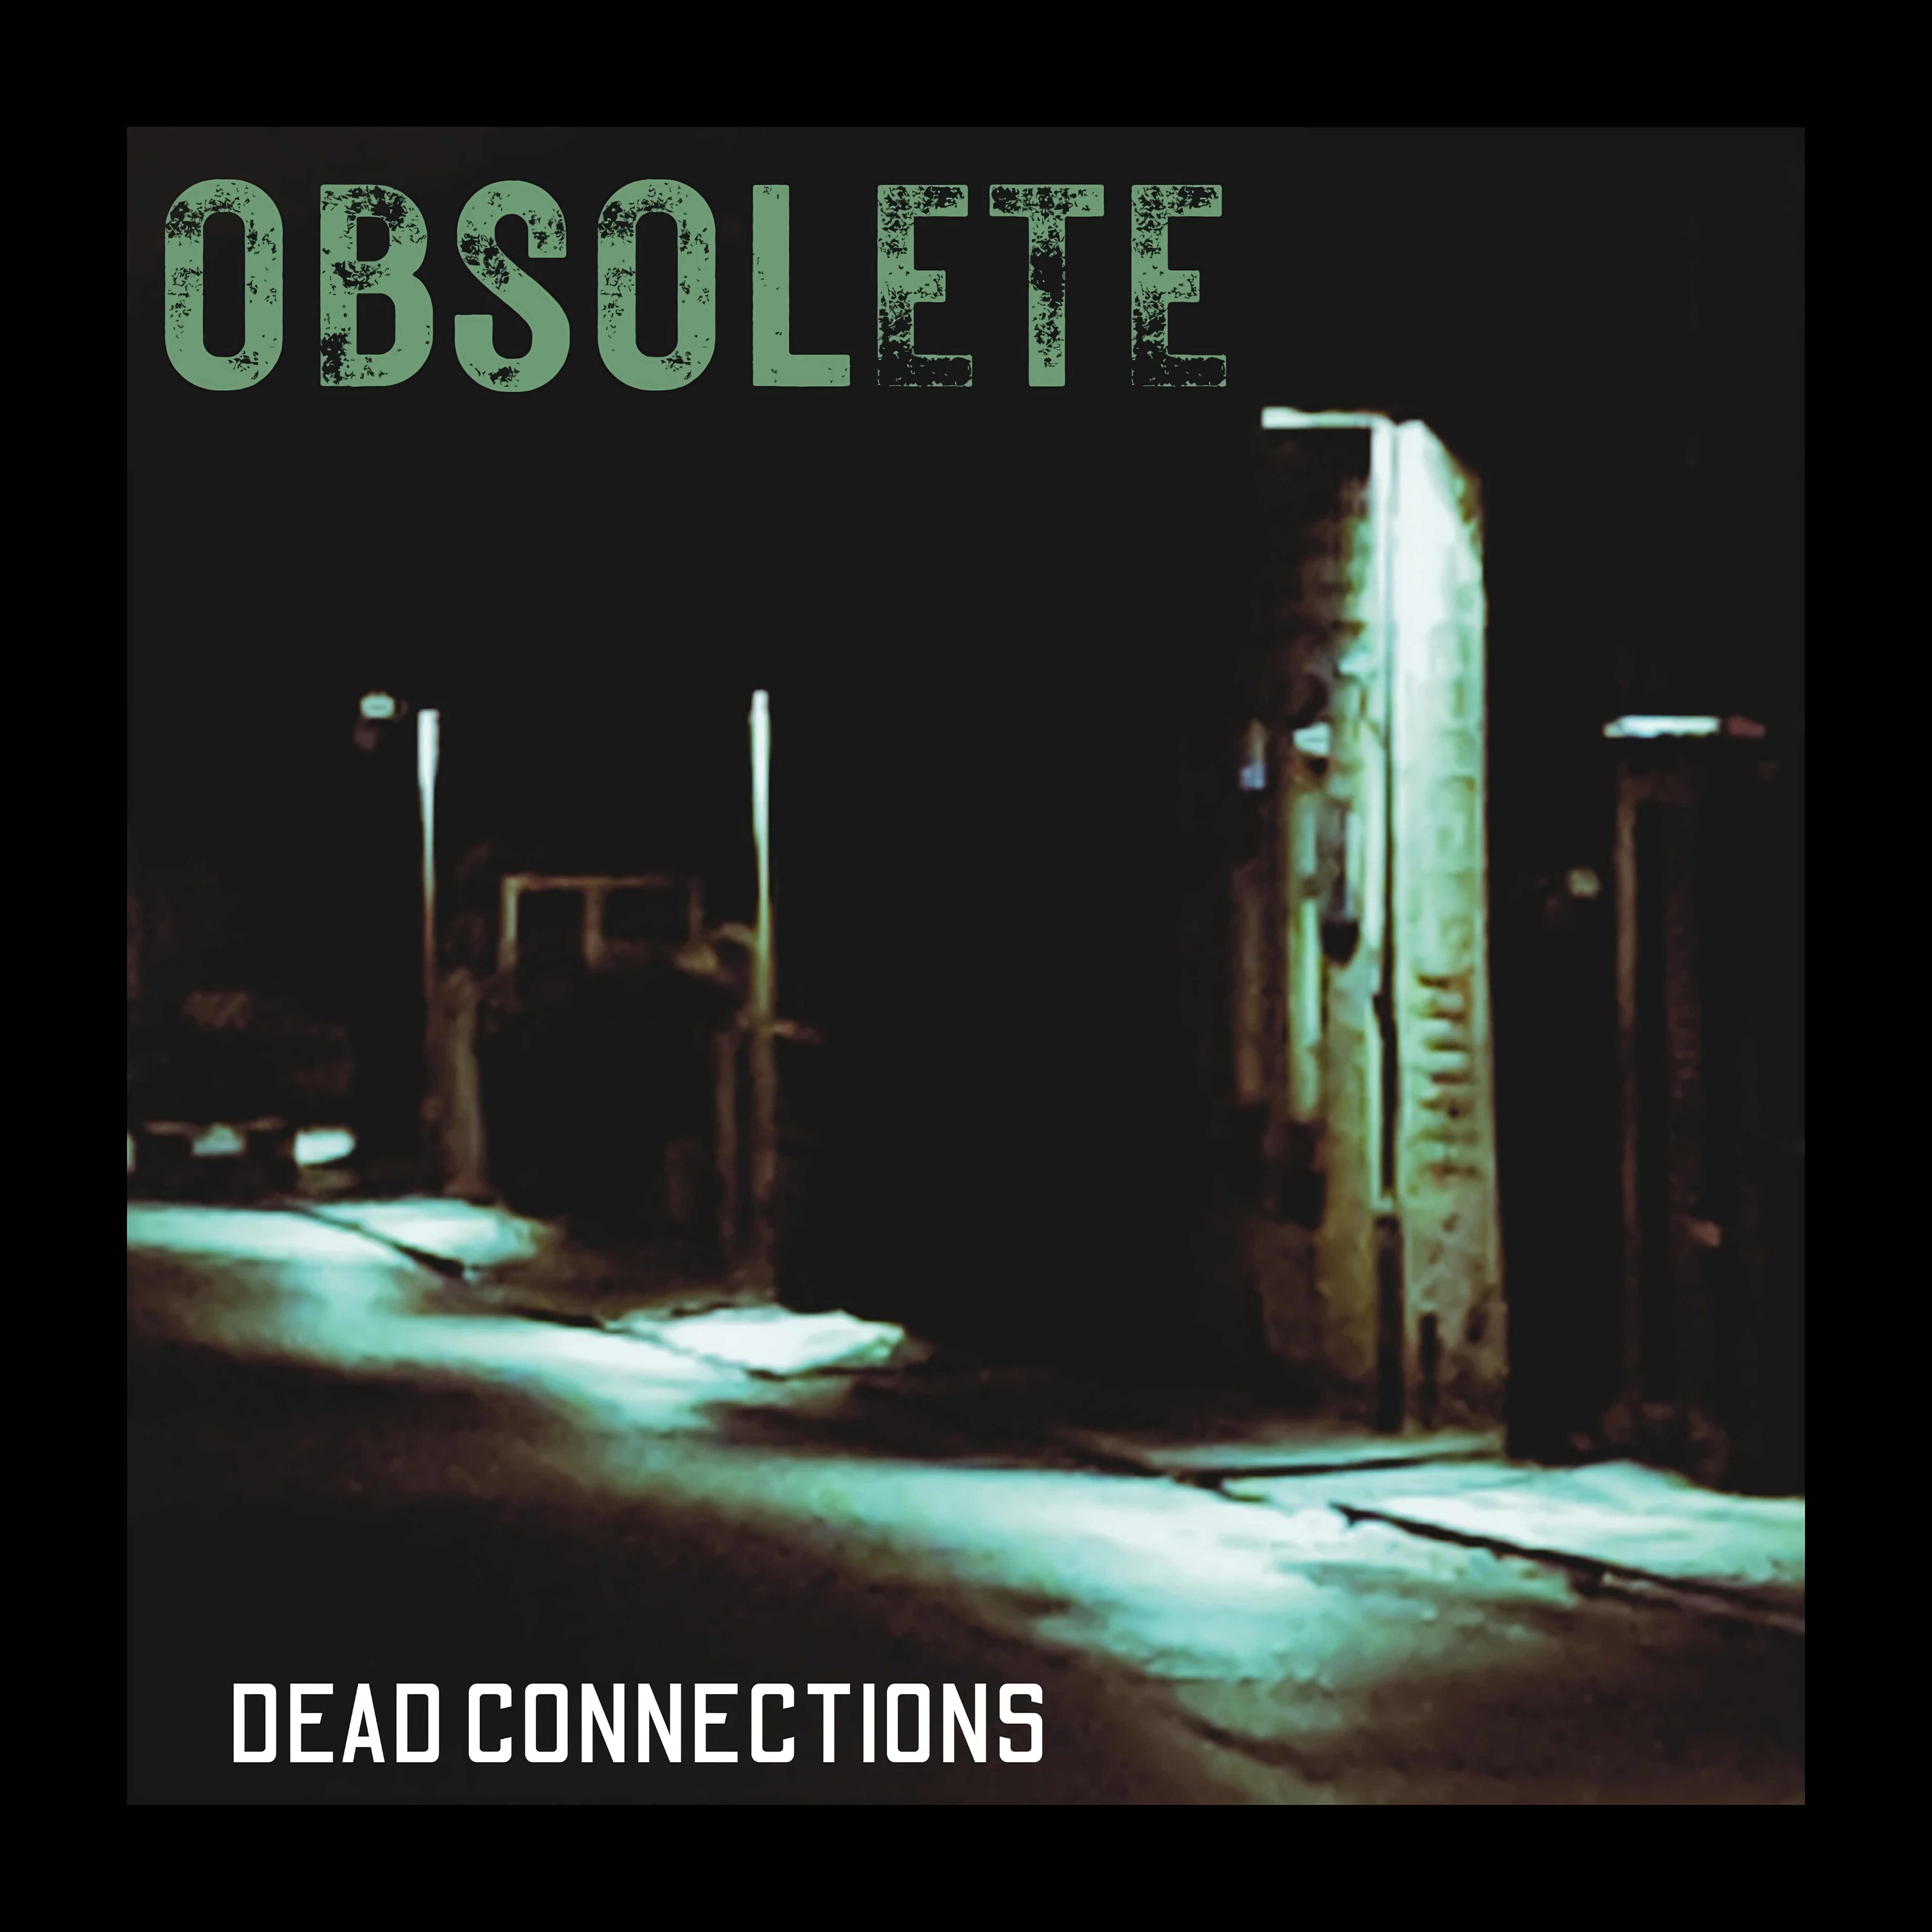 Dead Connection "Obsolete" single artwork